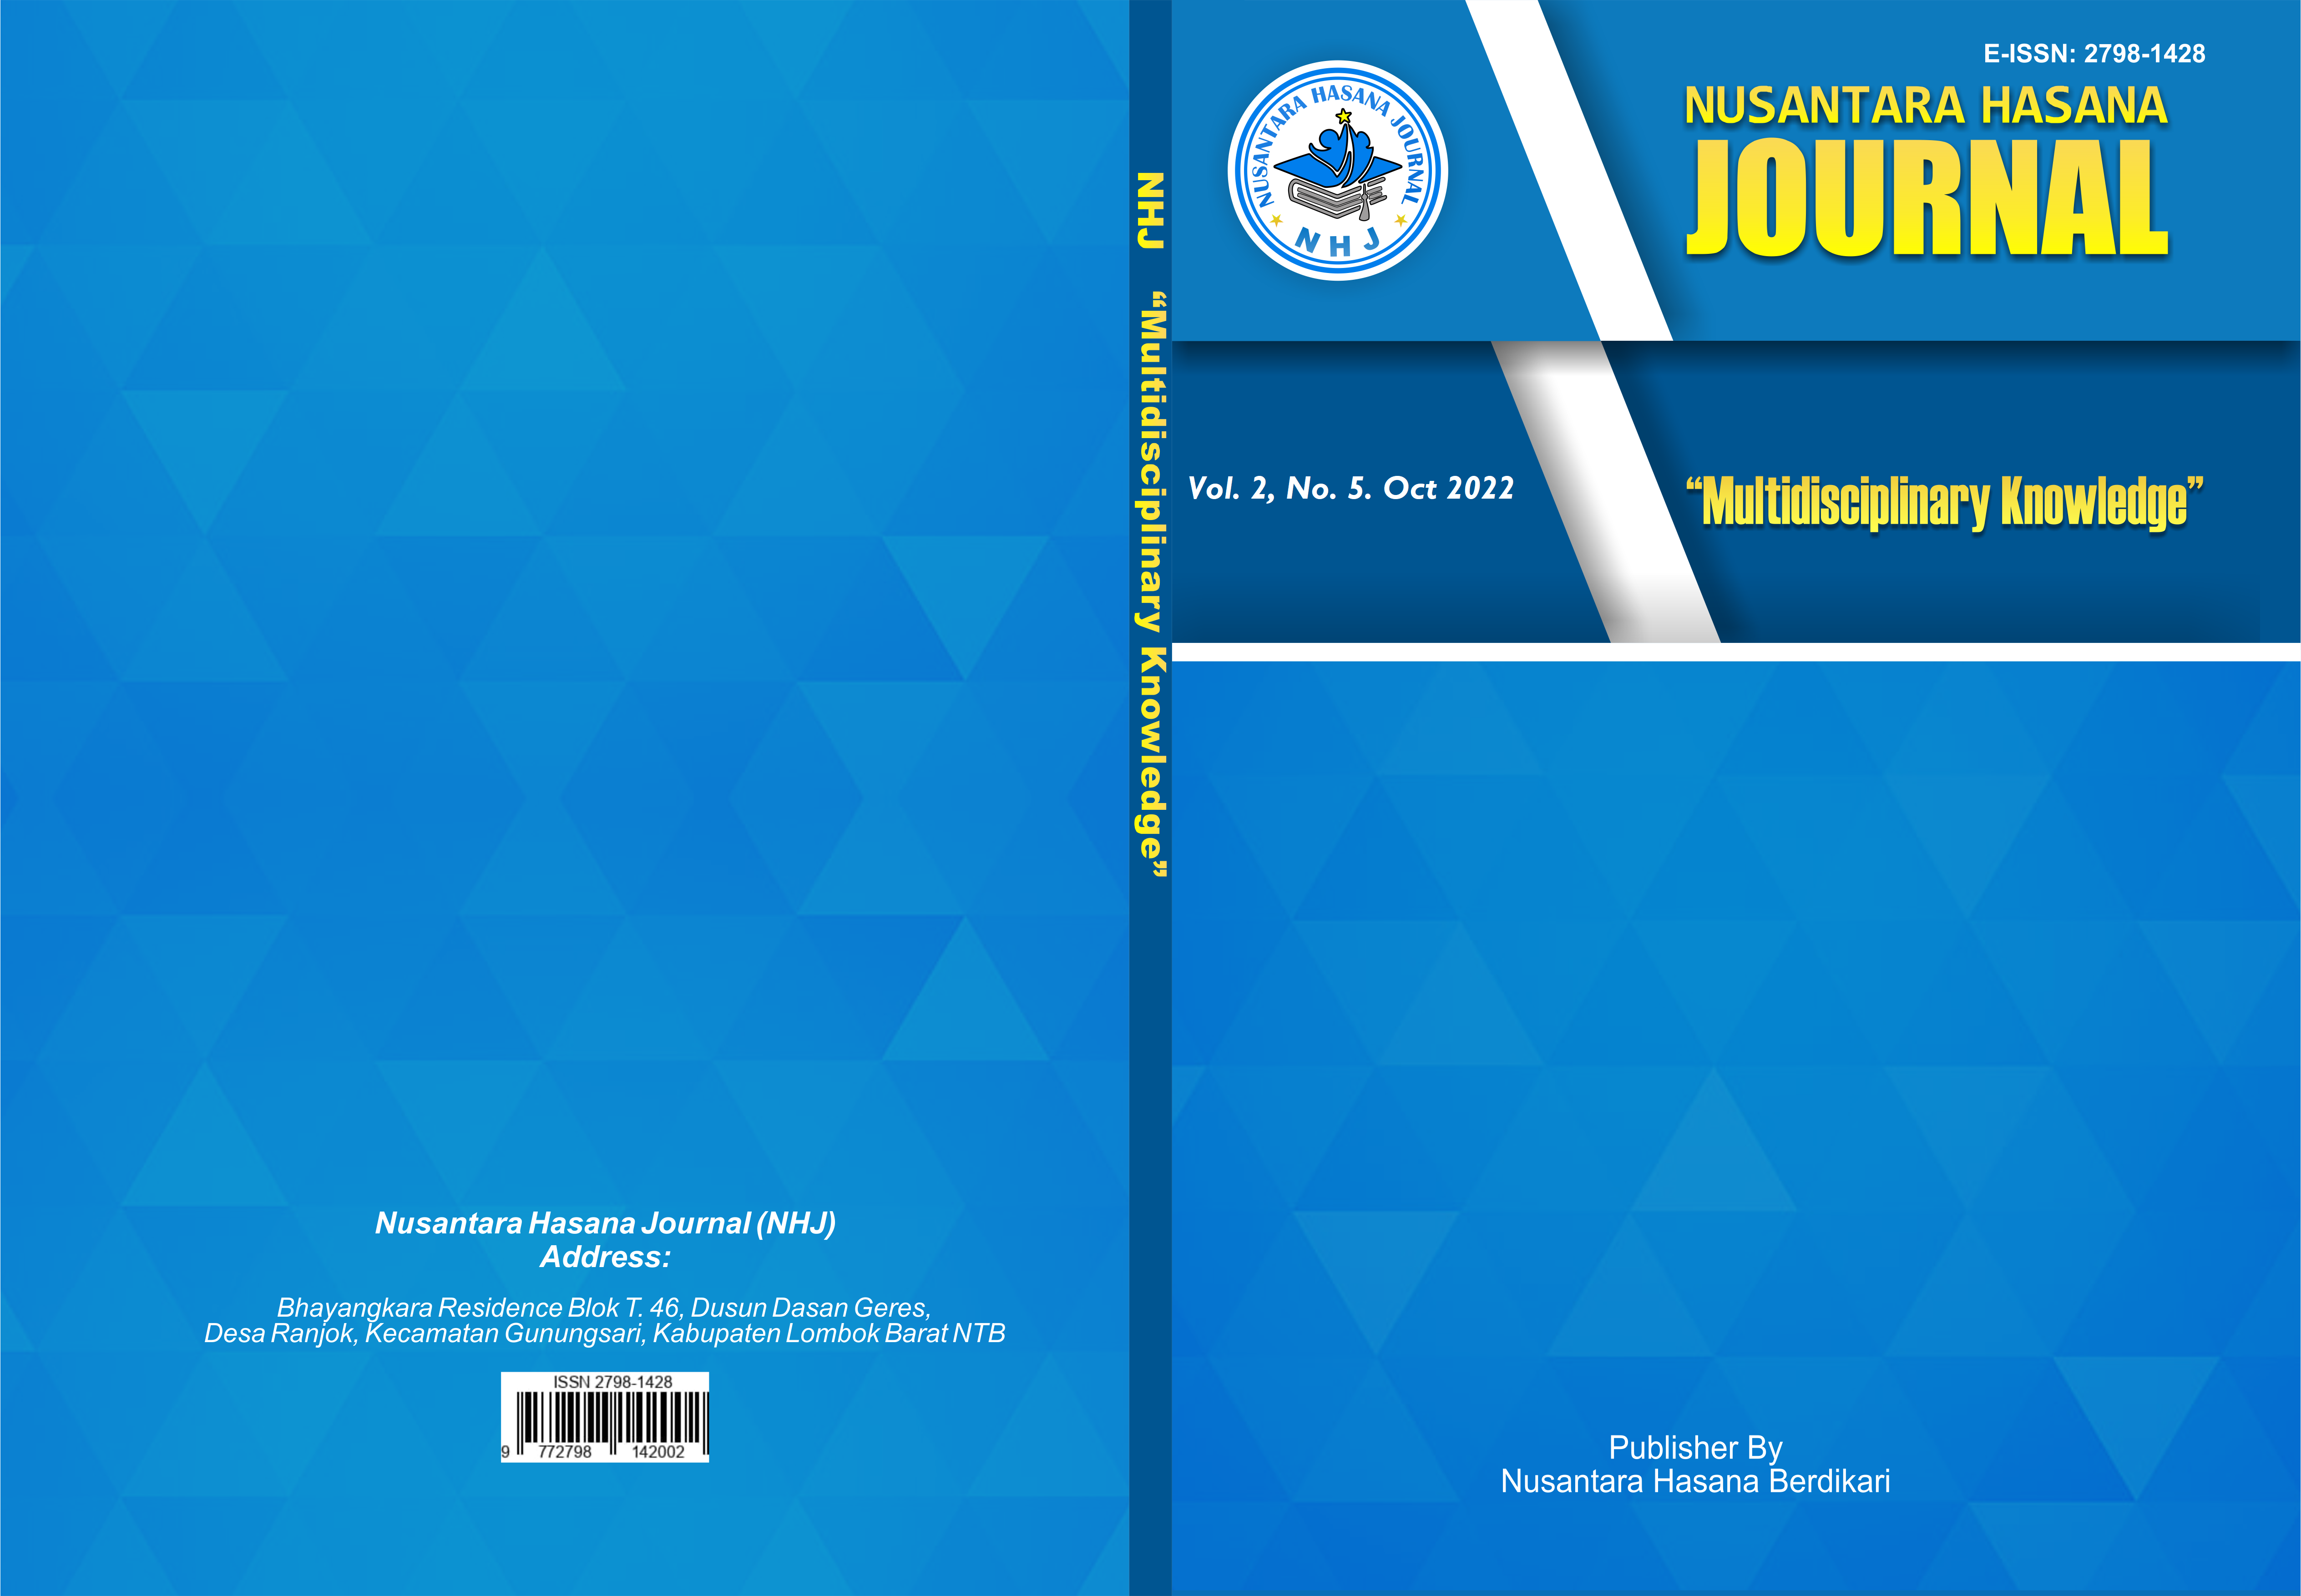 					View Vol. 2 No. 5 (2022): Nusantara Hasana Journal, October 2022
				